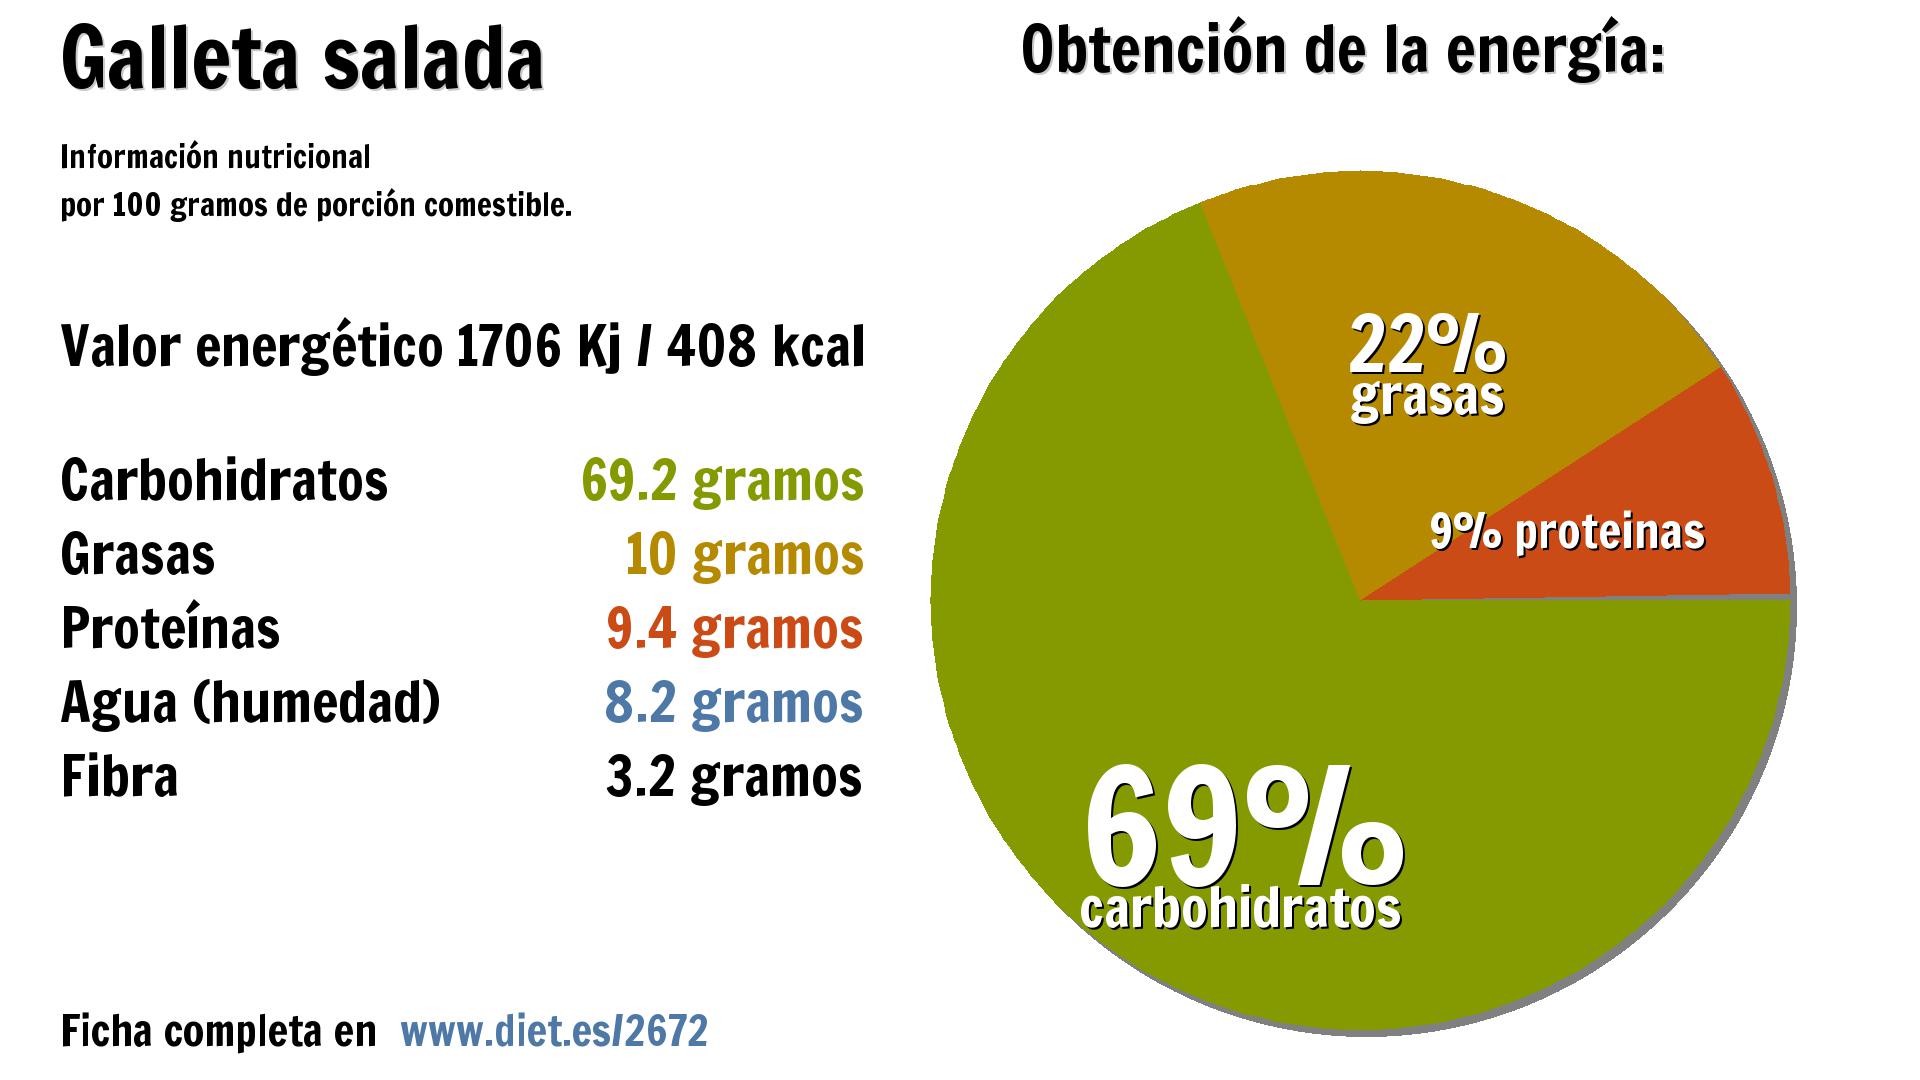 Galleta salada: energía 1706 Kj, carbohidratos 69 g., grasas 10 g., proteínas 9 g., agua 8 g. y fibra 3 g.